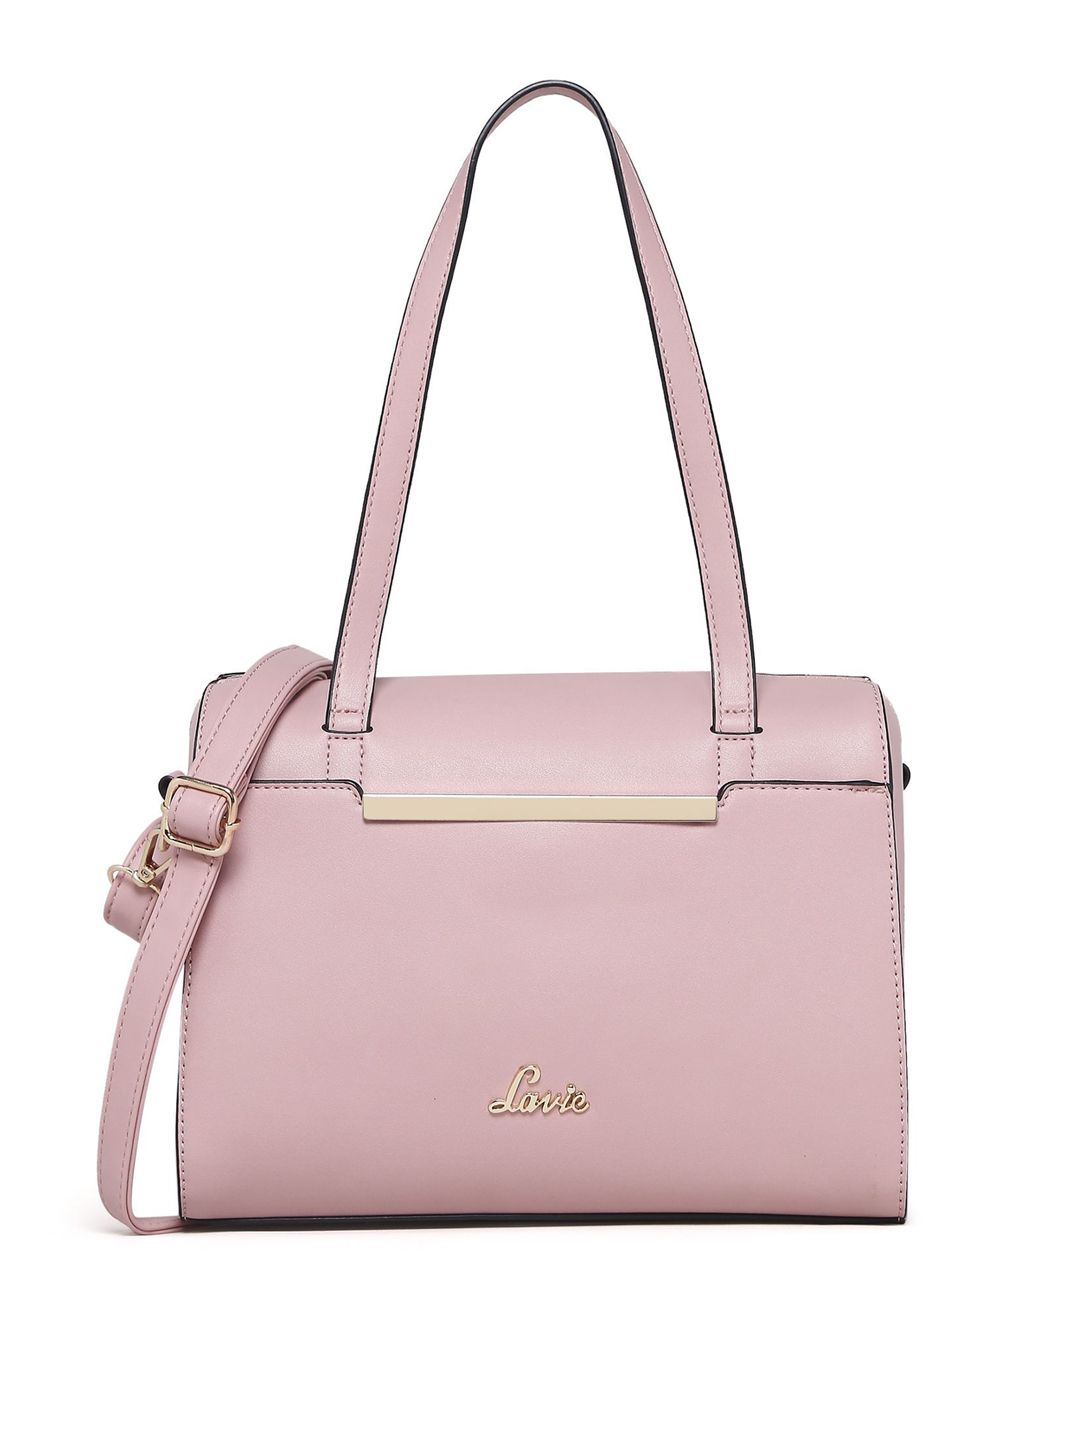 Lavie Pink Structured Shoulder Bag Price in India